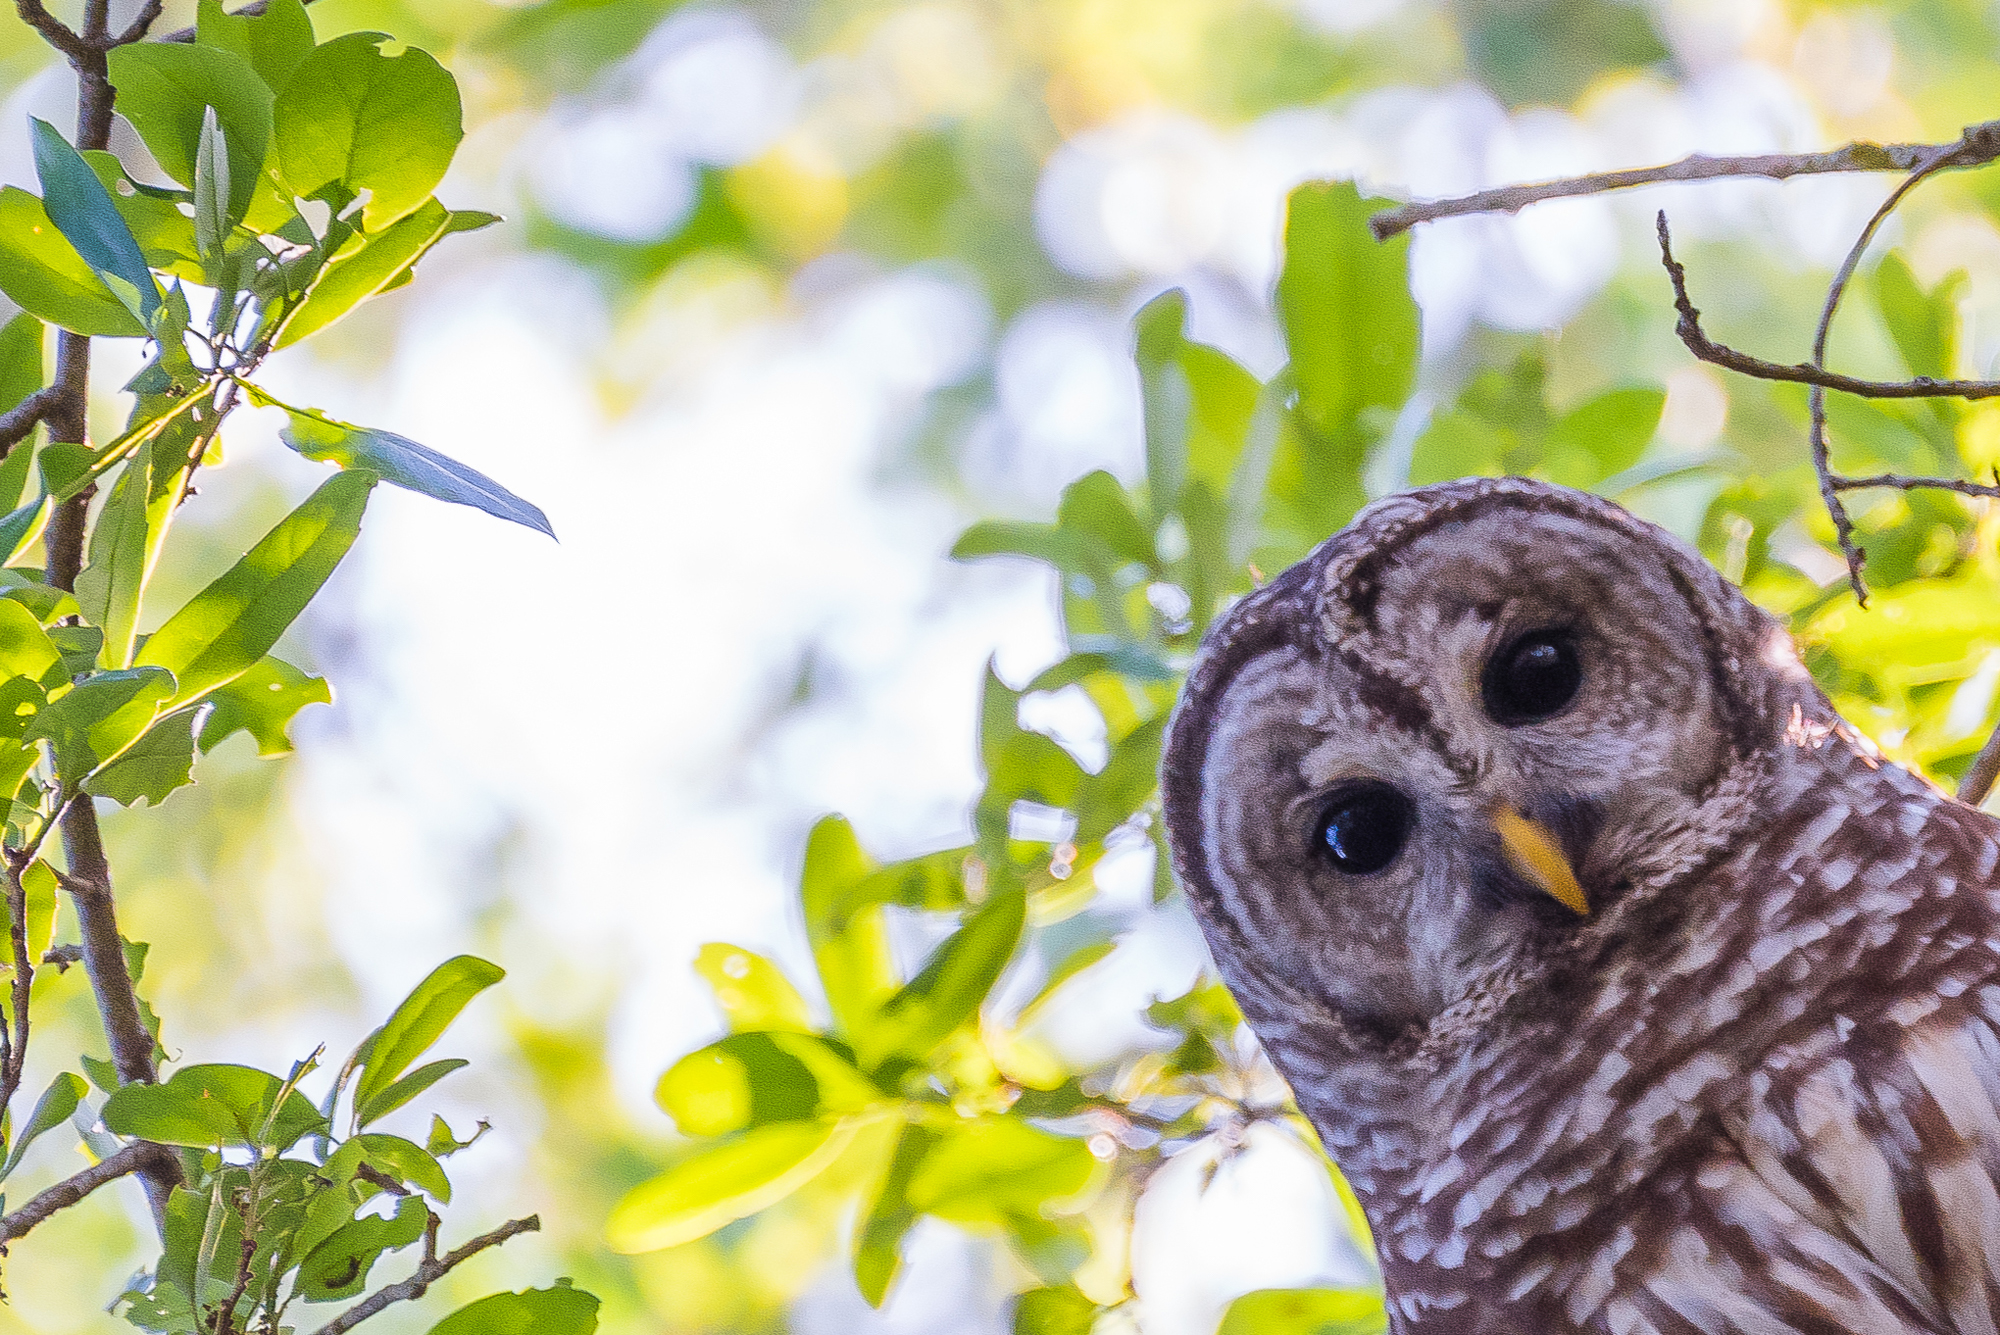 Photo by Douglas DeFelice/Owl's Nest Sanctuary for Wildlife